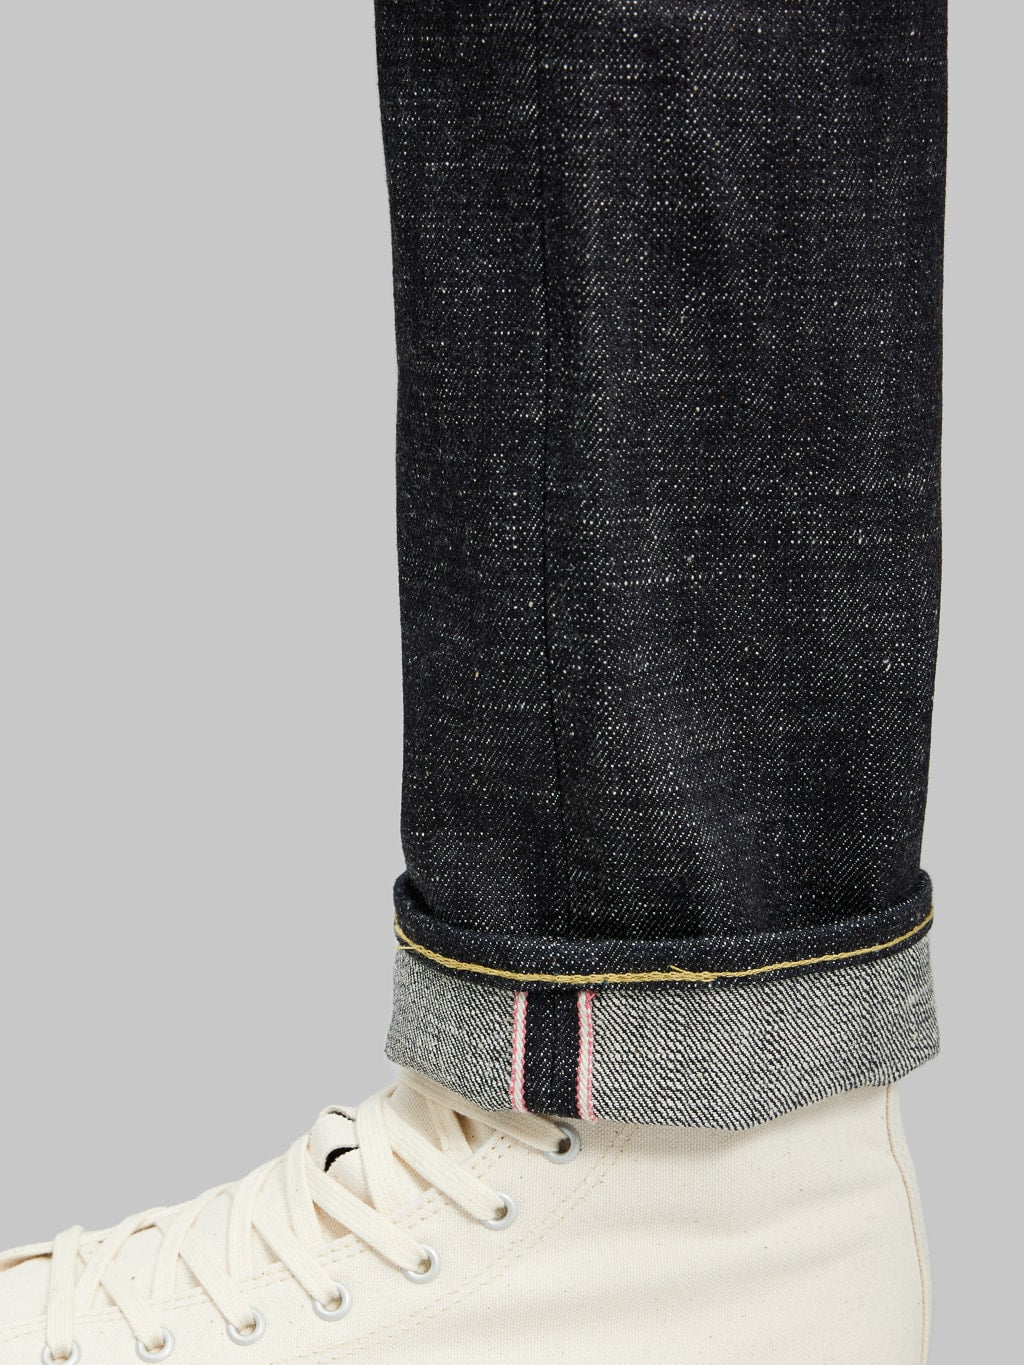 momotaro jeans 0605 82 16oz texture denim natural tapered selvedge